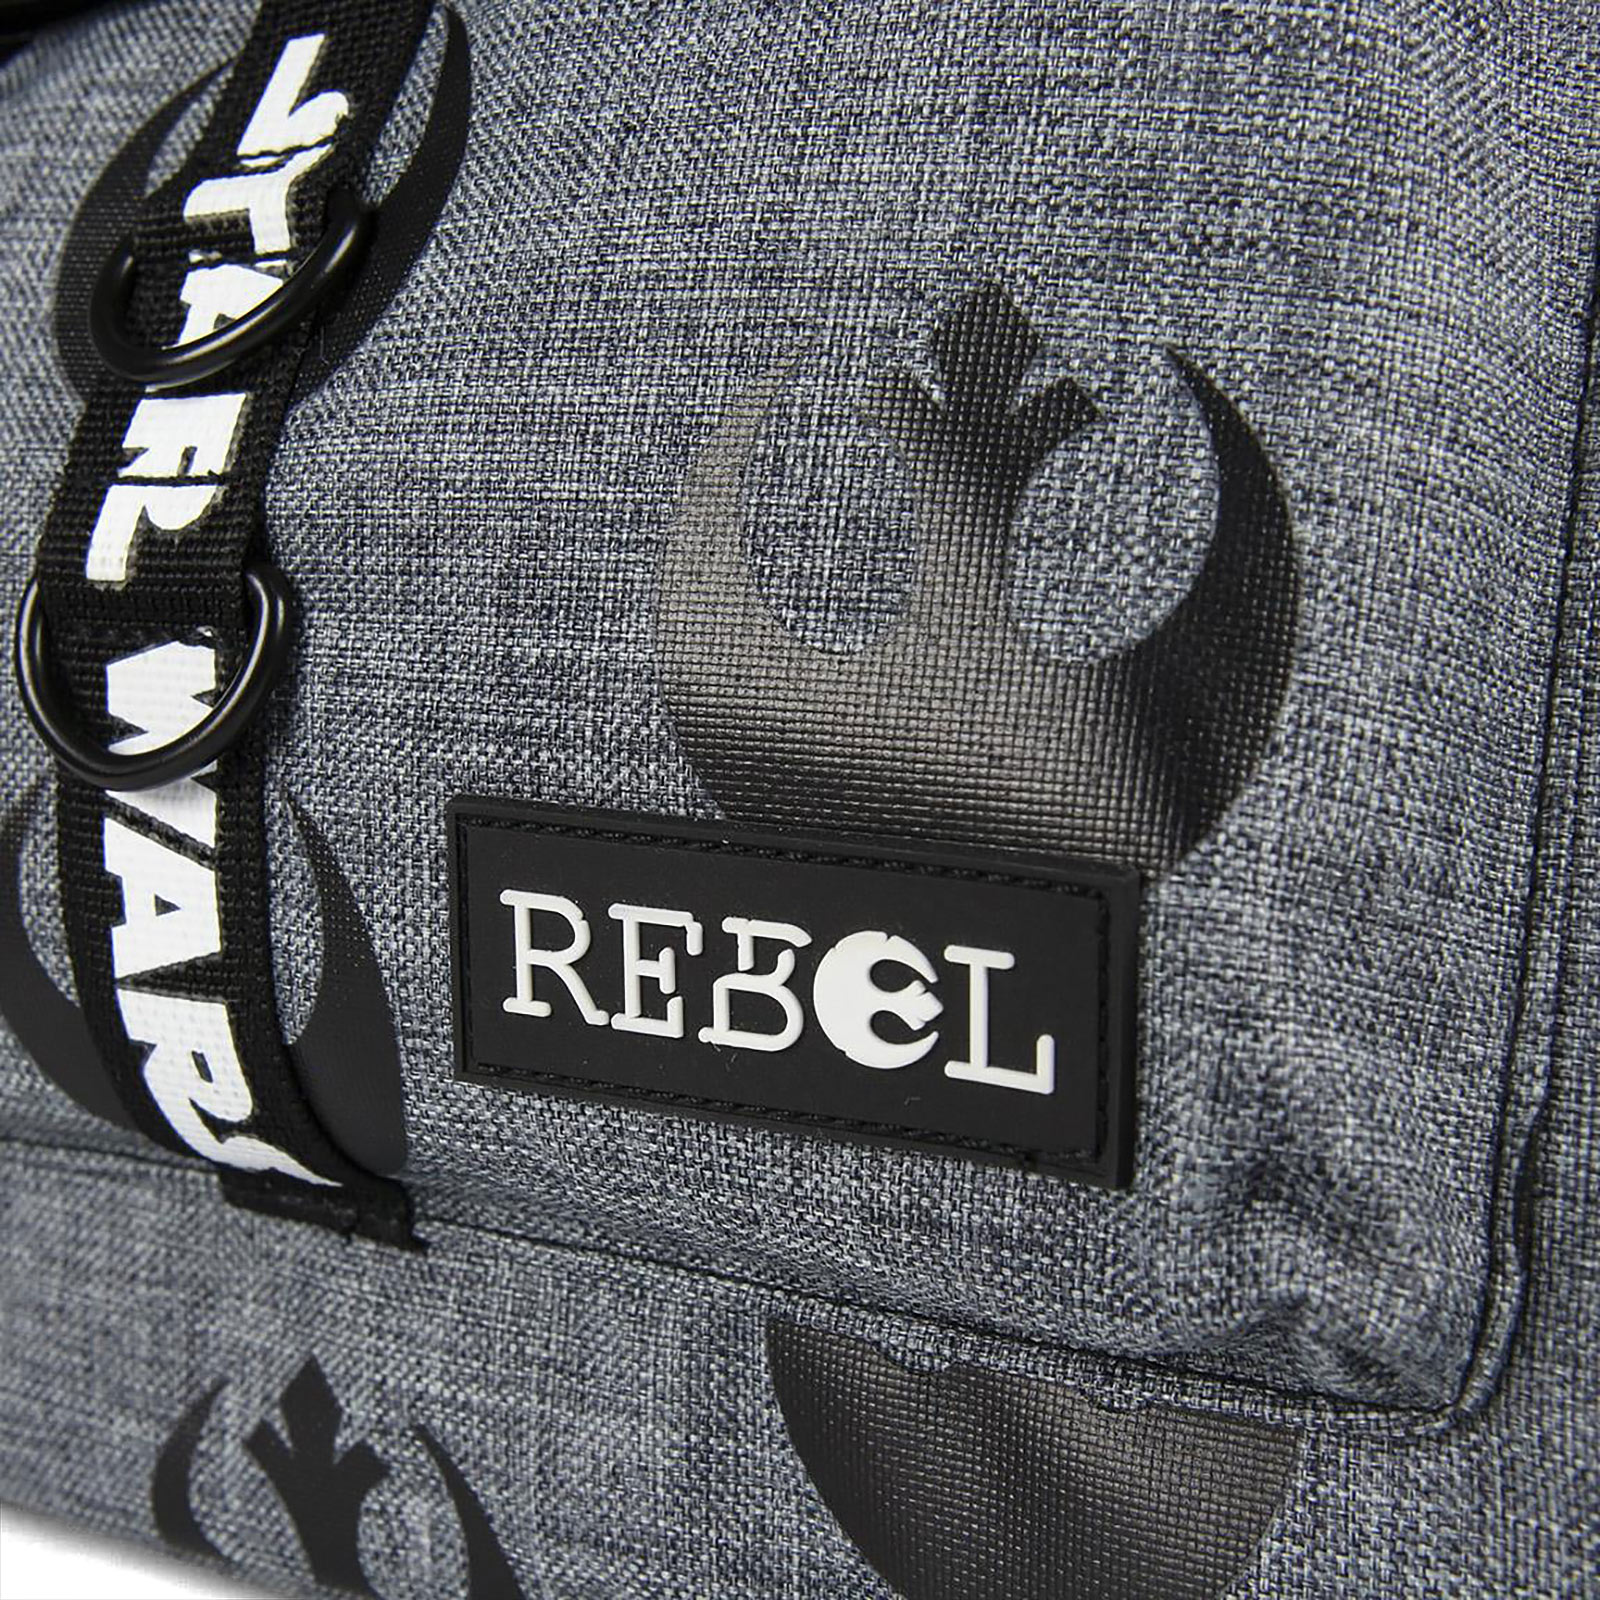 Star Wars - Rebel Backpack